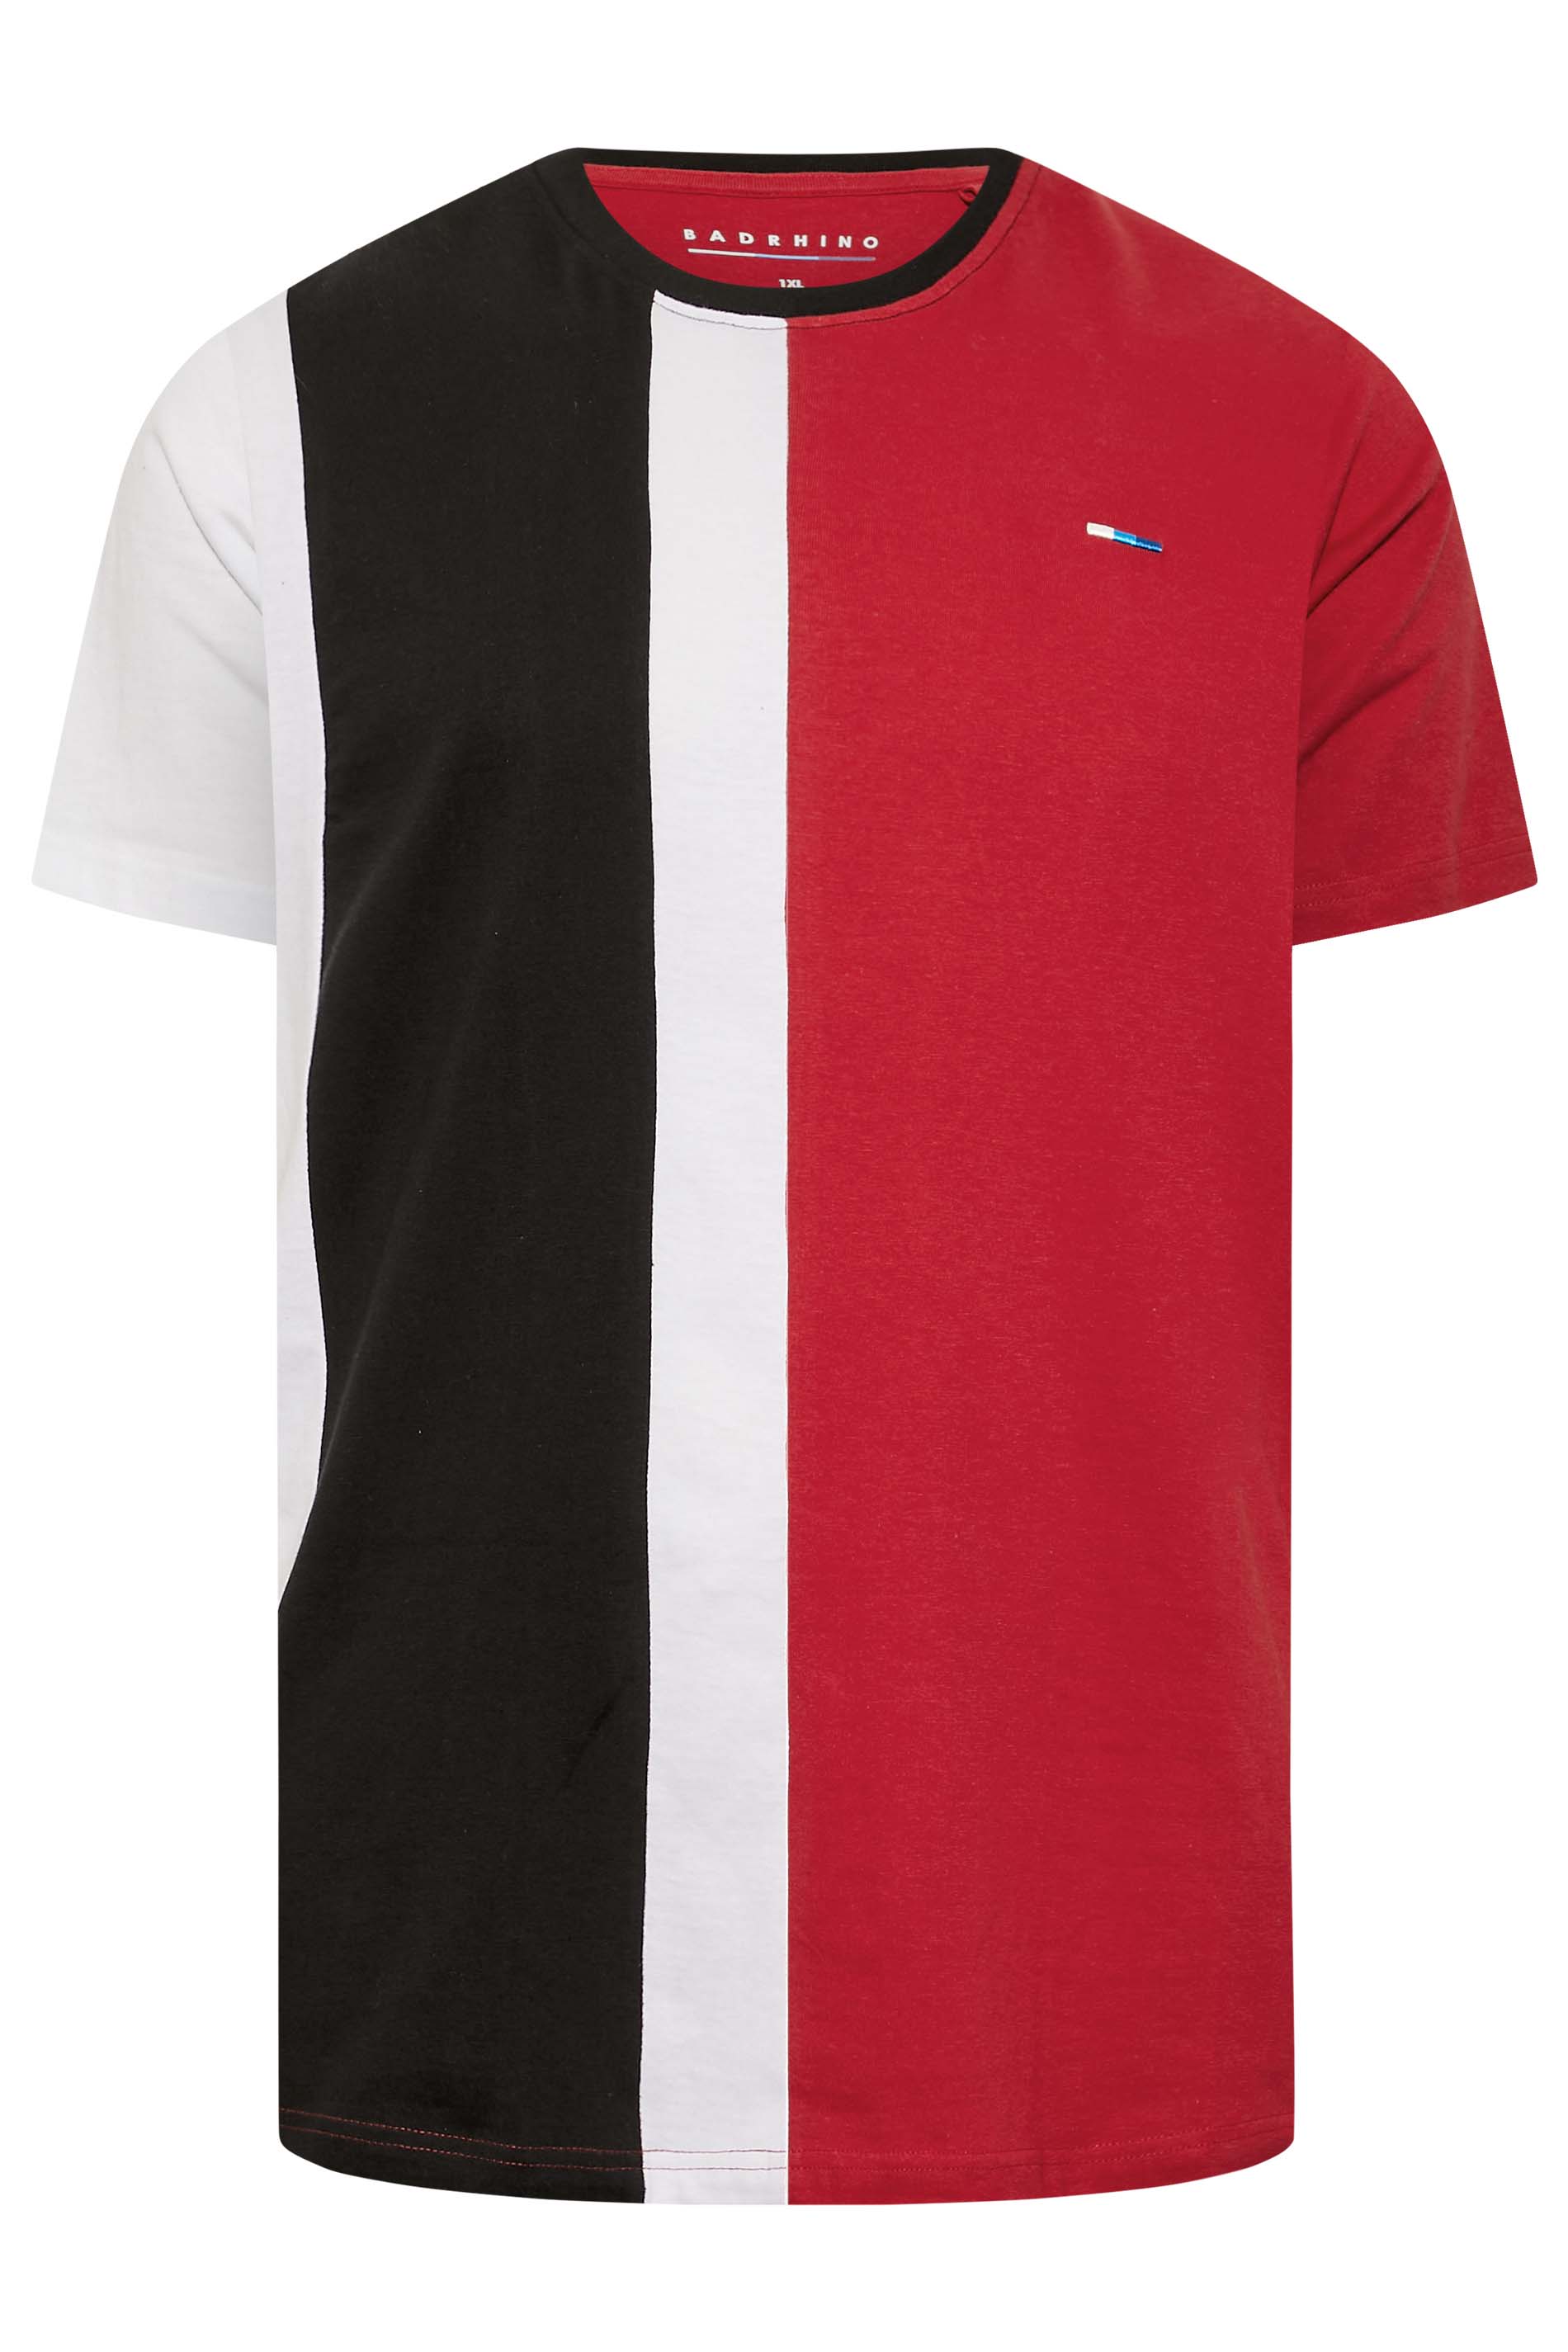 BadRhino Big & Tall Red & Black Cut & Sew T-Shirt | BadRhino 3